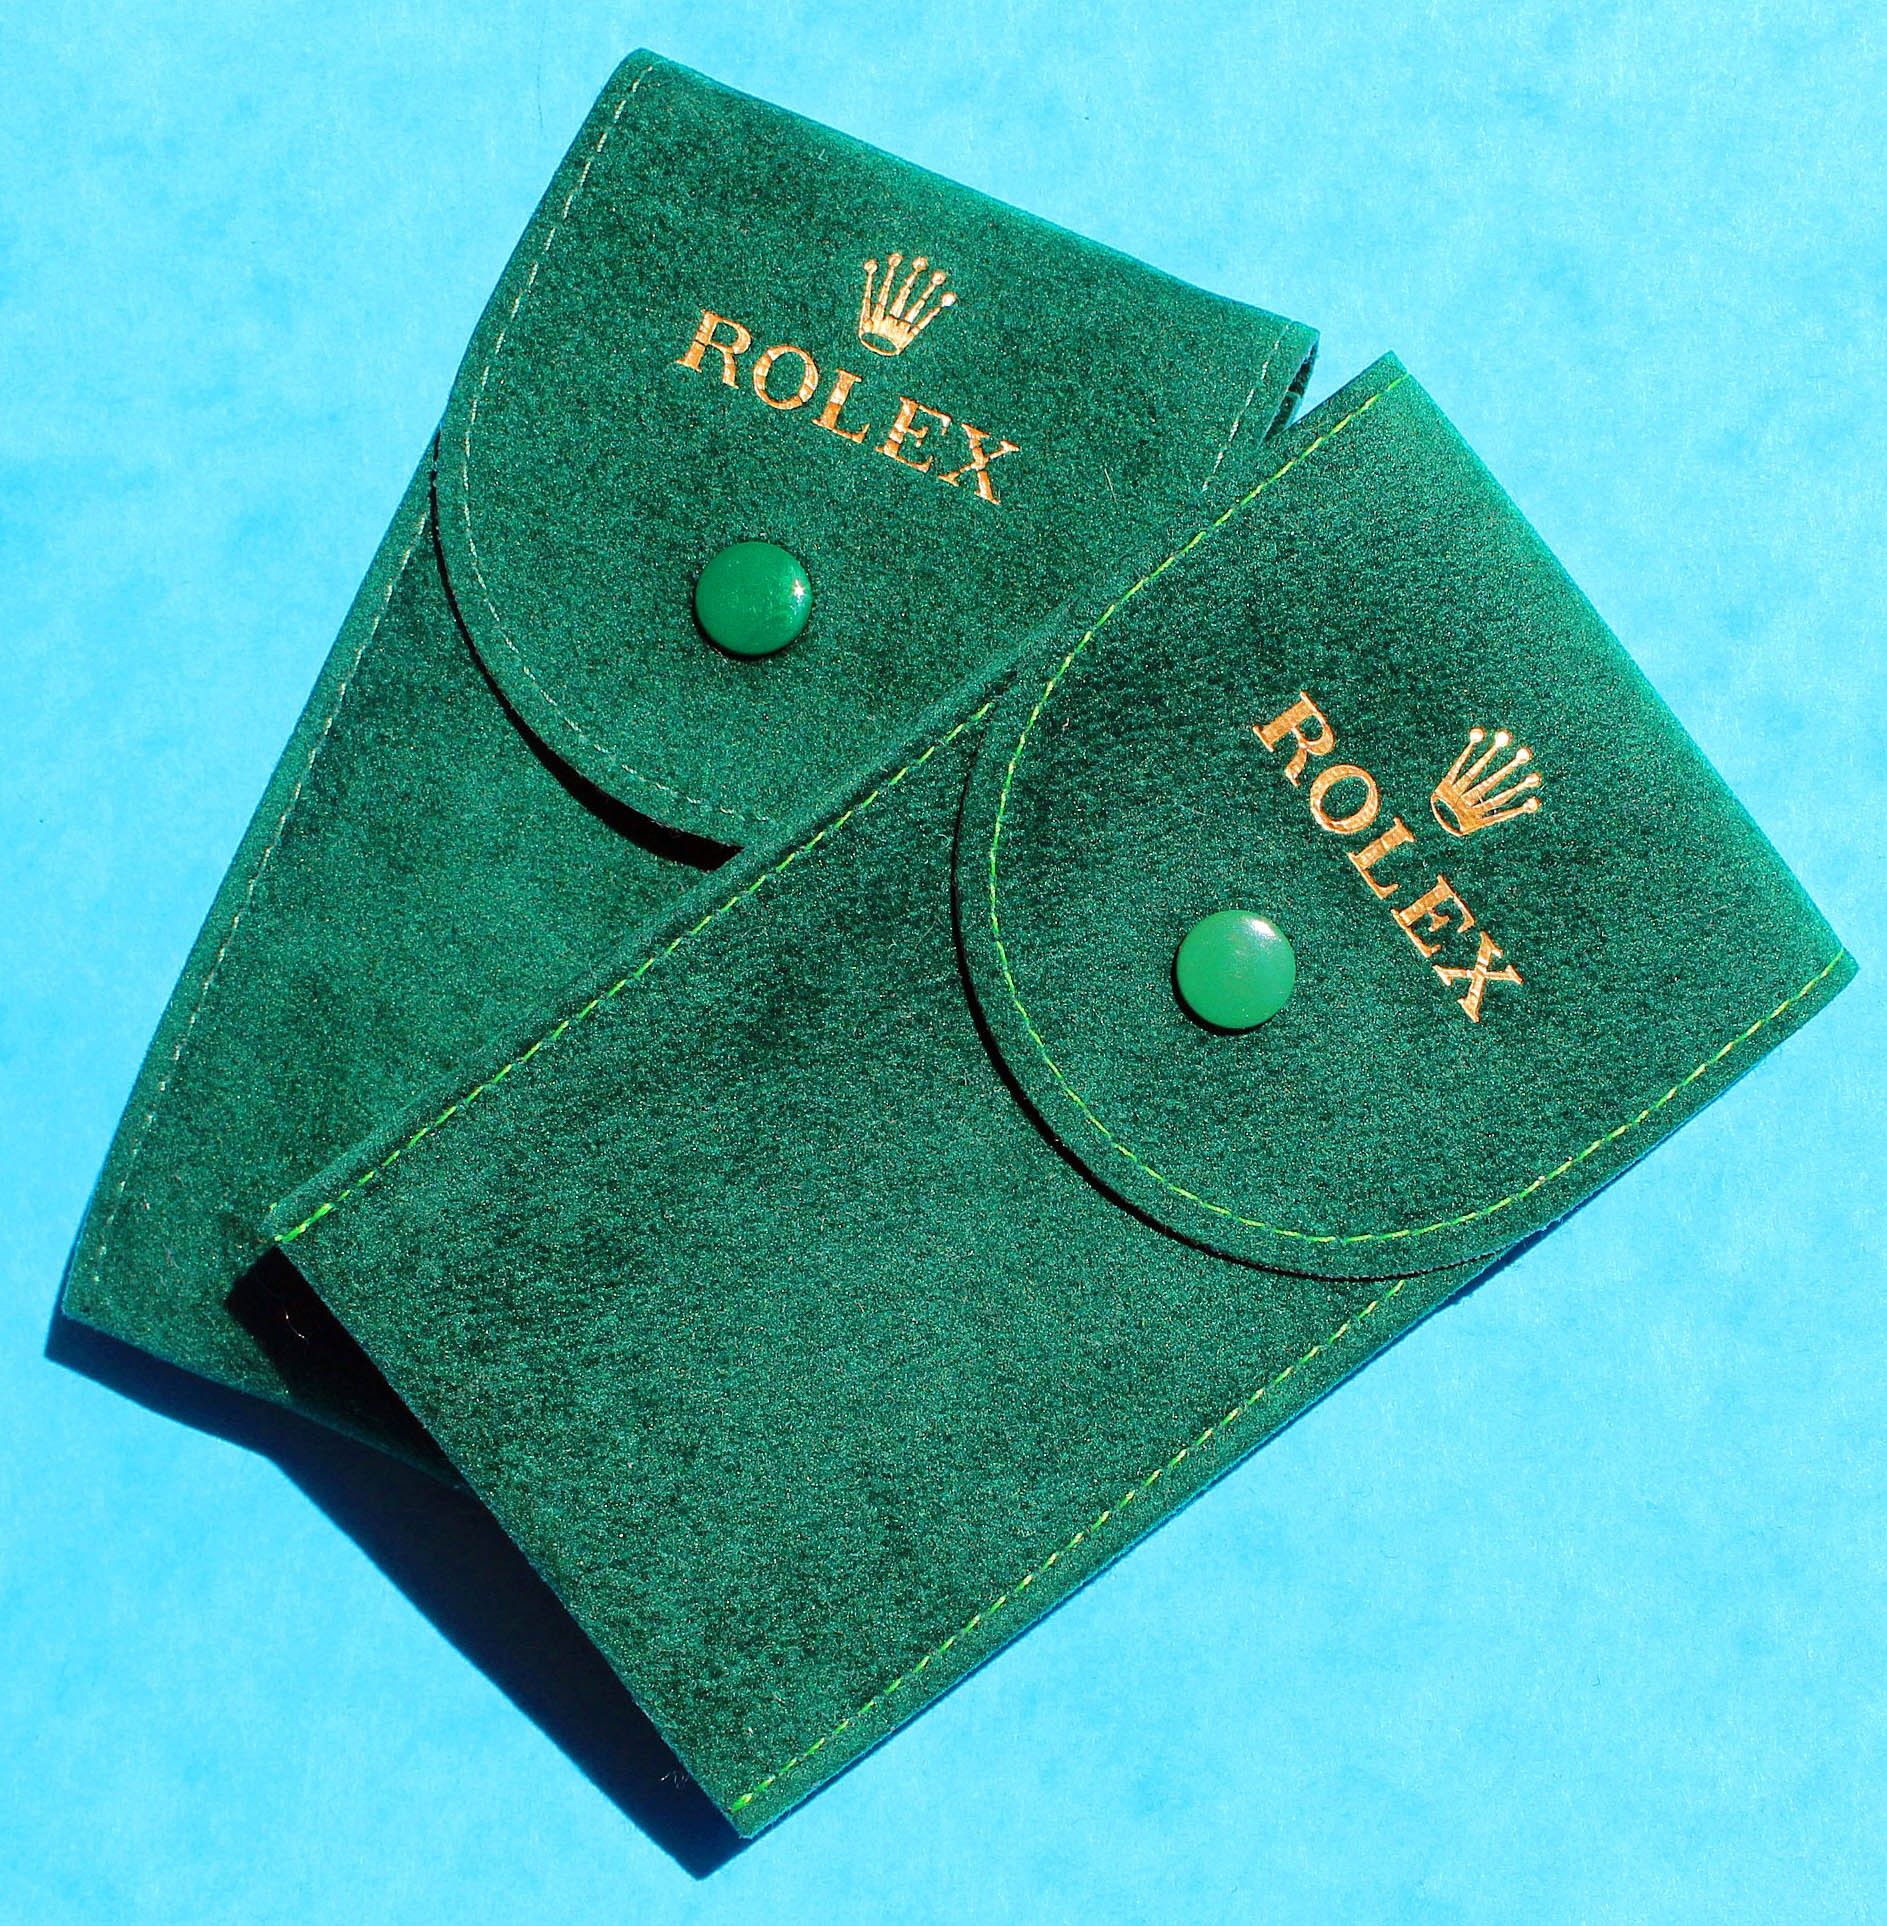 Rolex Lot of 2 Suede green velvet pouch traveler's service holder